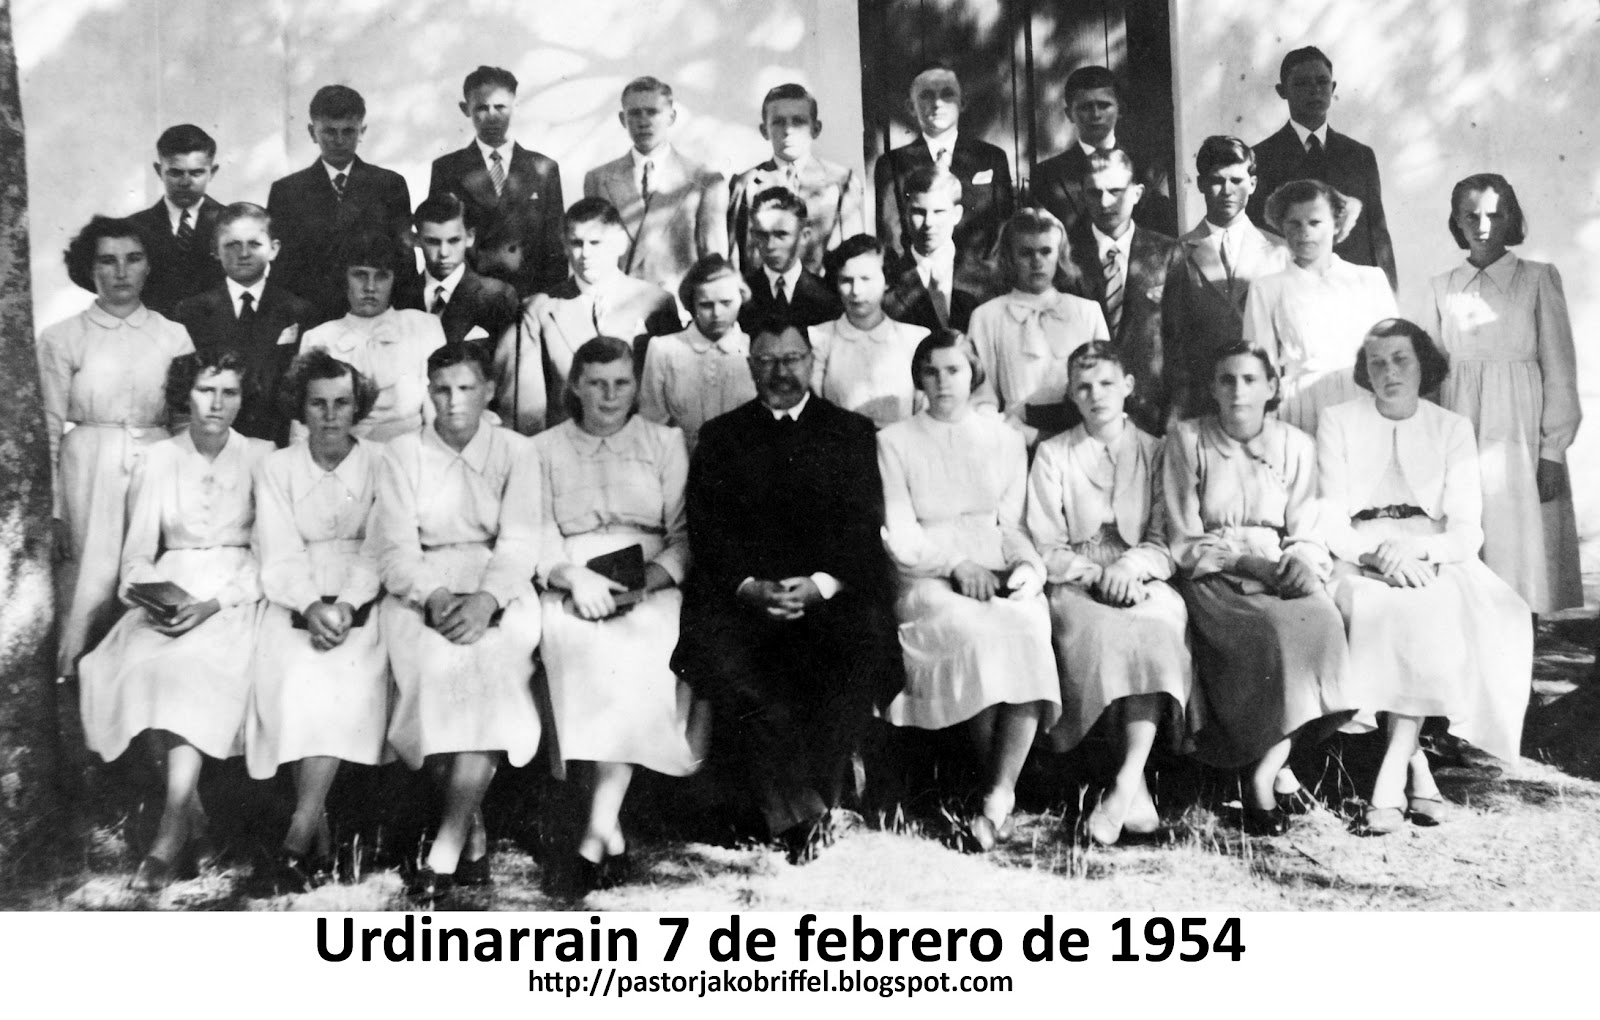 Confirmation (7 February 1954) Lutheran Church in Urdinarrain with Pastor Riffel Source: pastorjakobriffel.blogspot.com